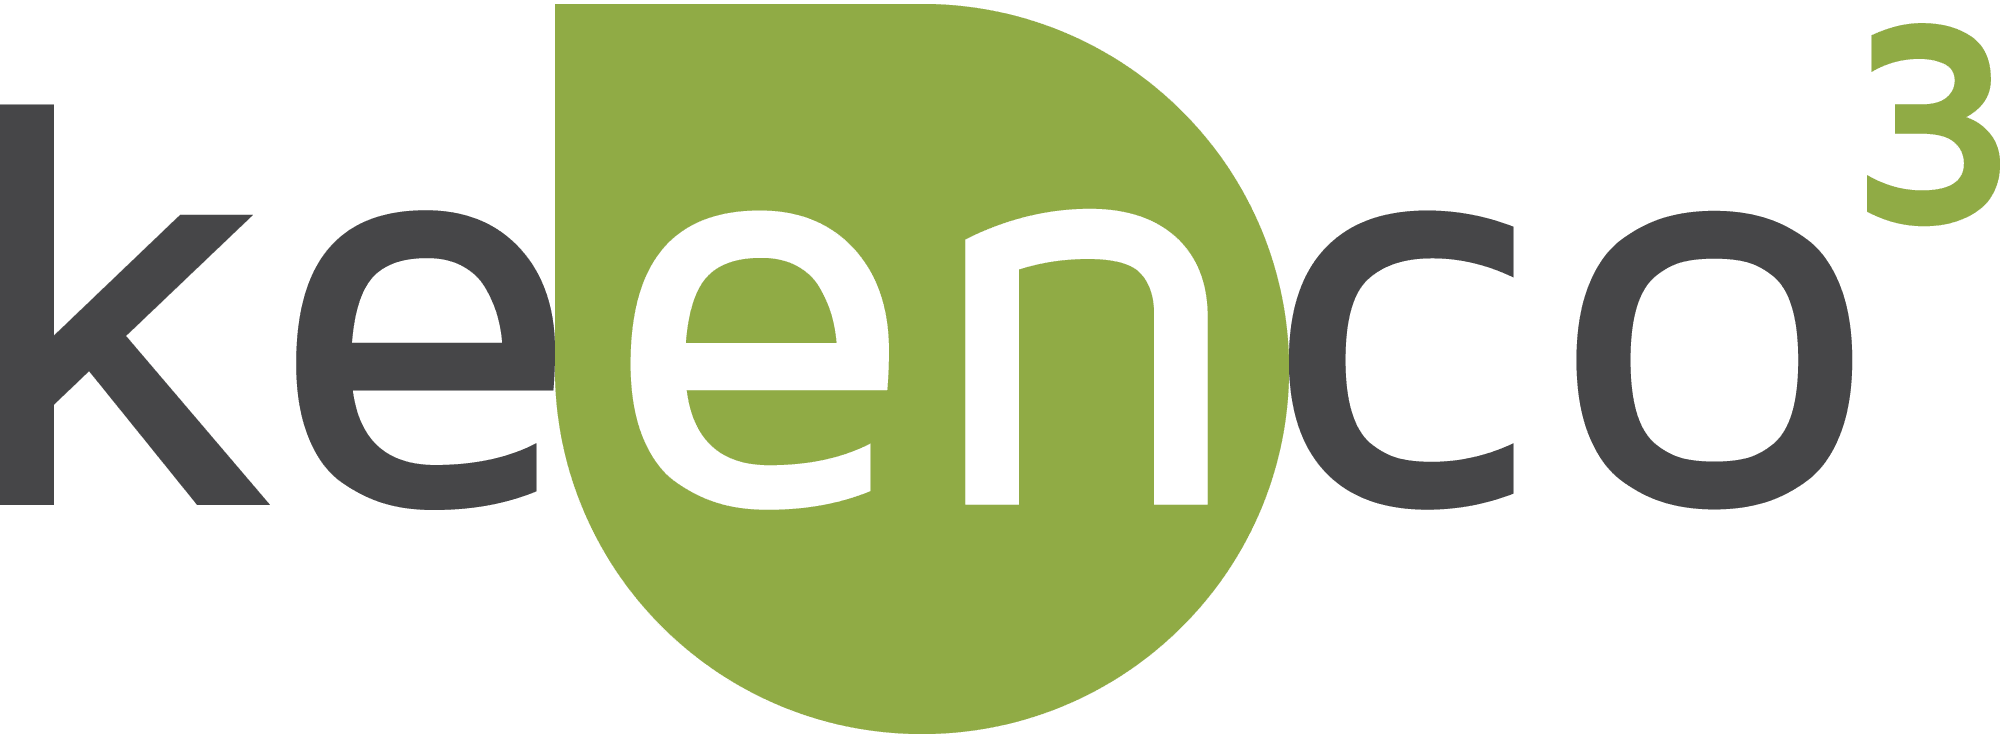 Keenco3 logo